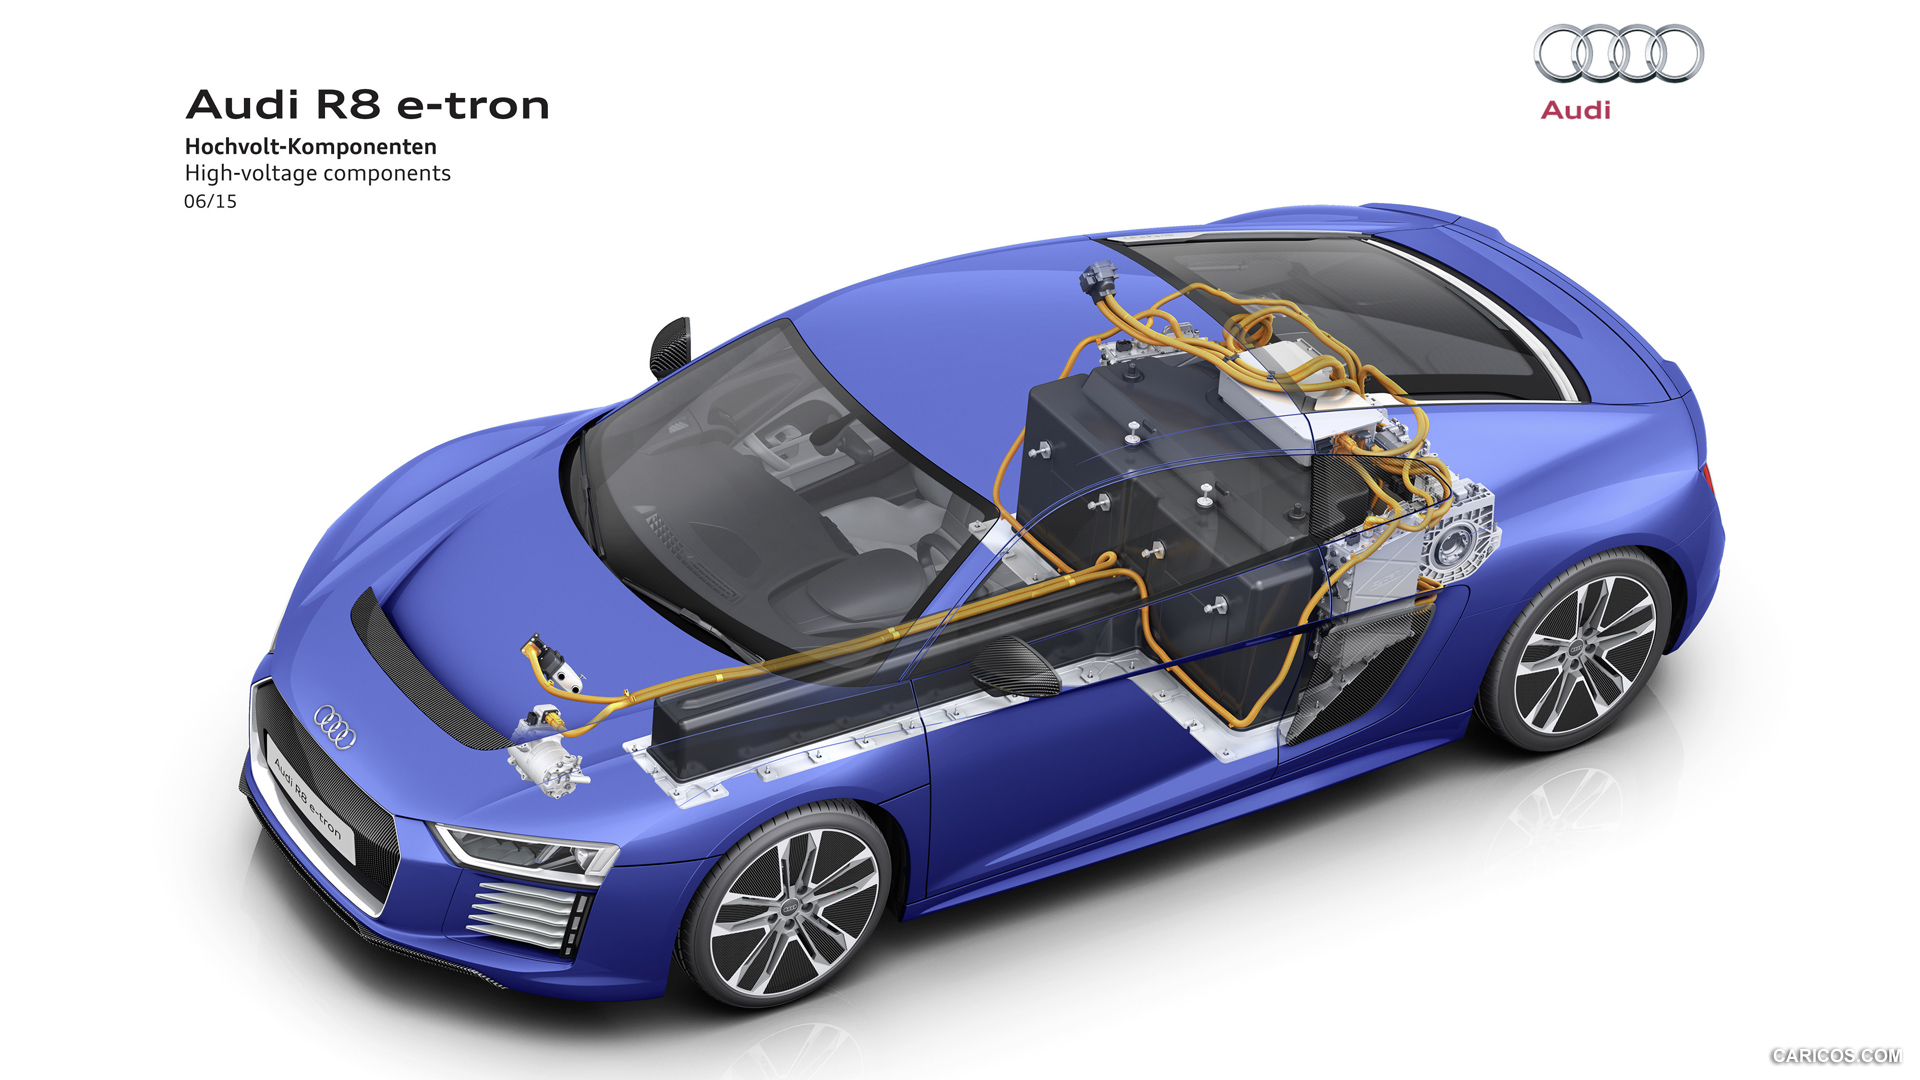 2016 Audi R8 etron  High Voltage Components  HD Wallpaper 27 